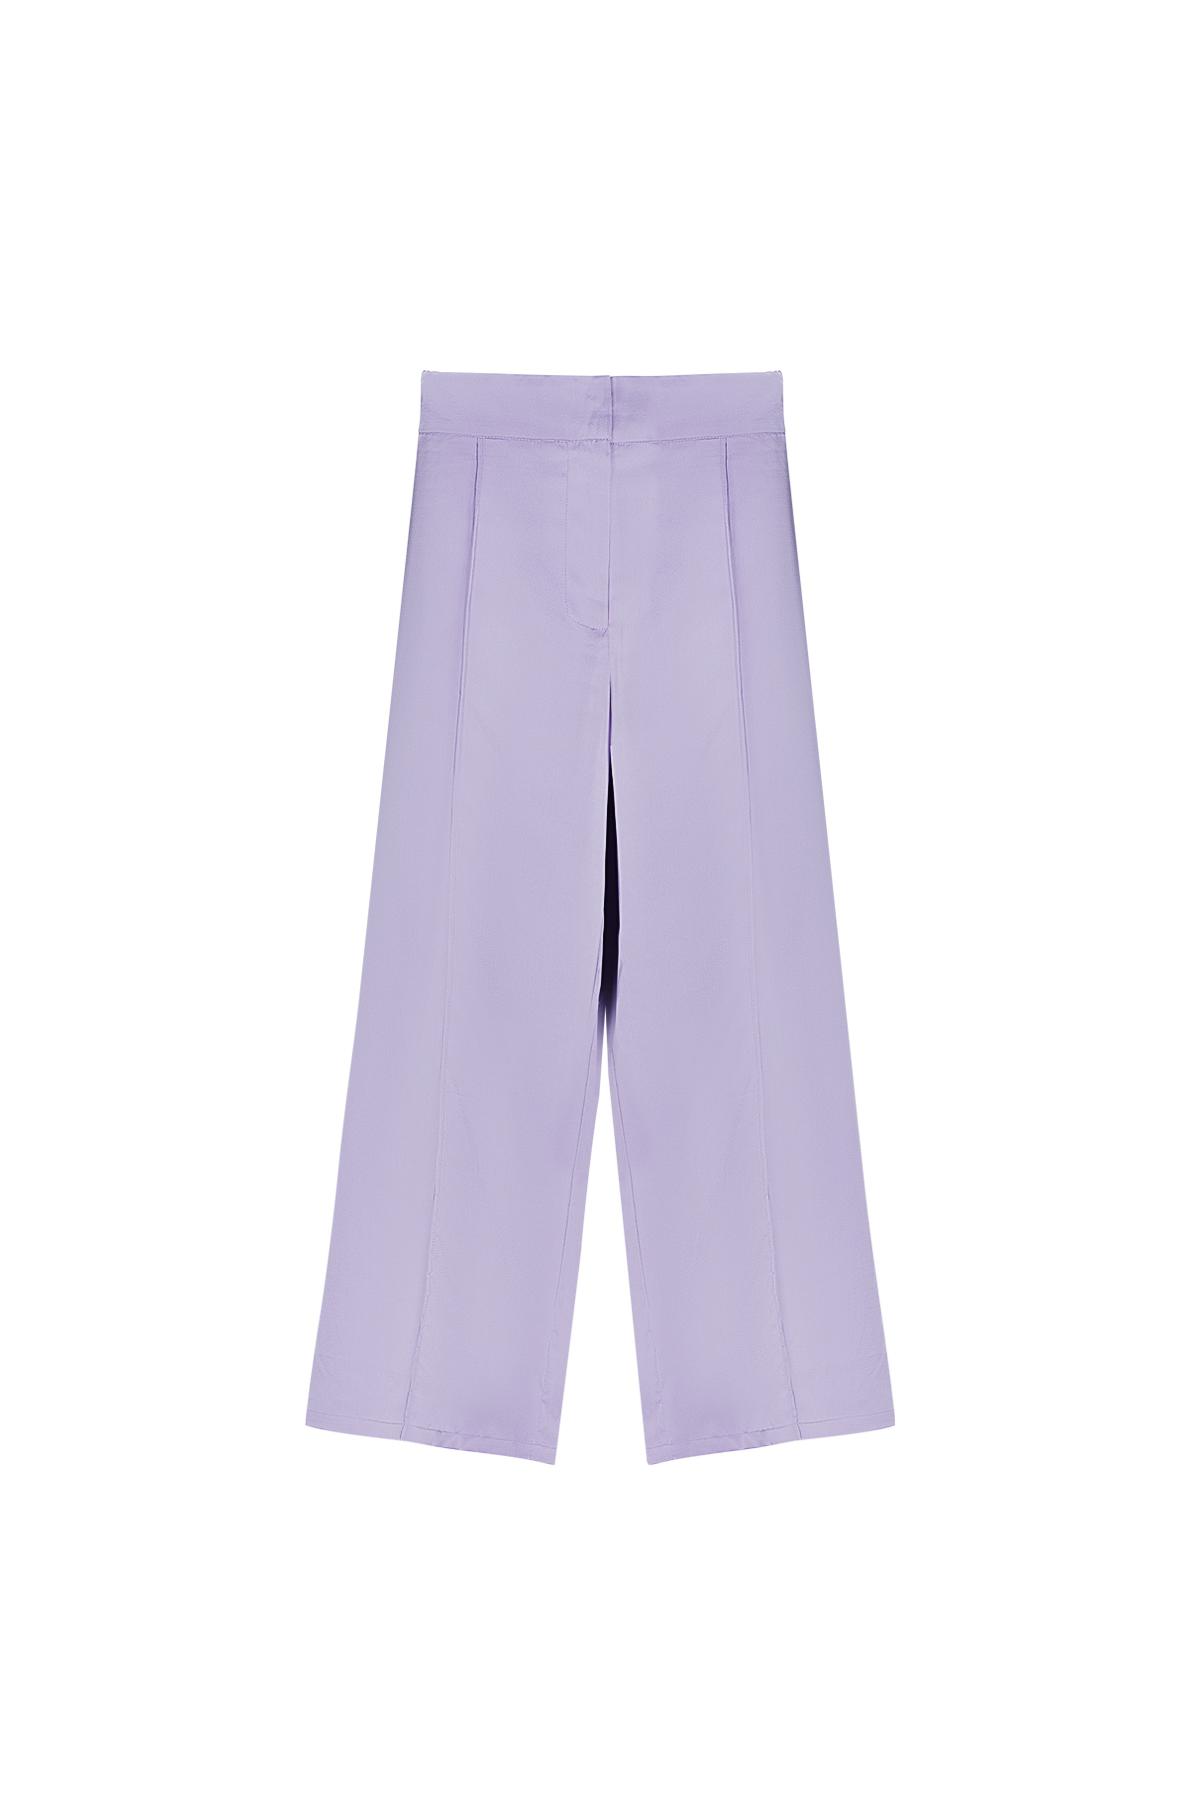 Pants shiny fabric Purple S 